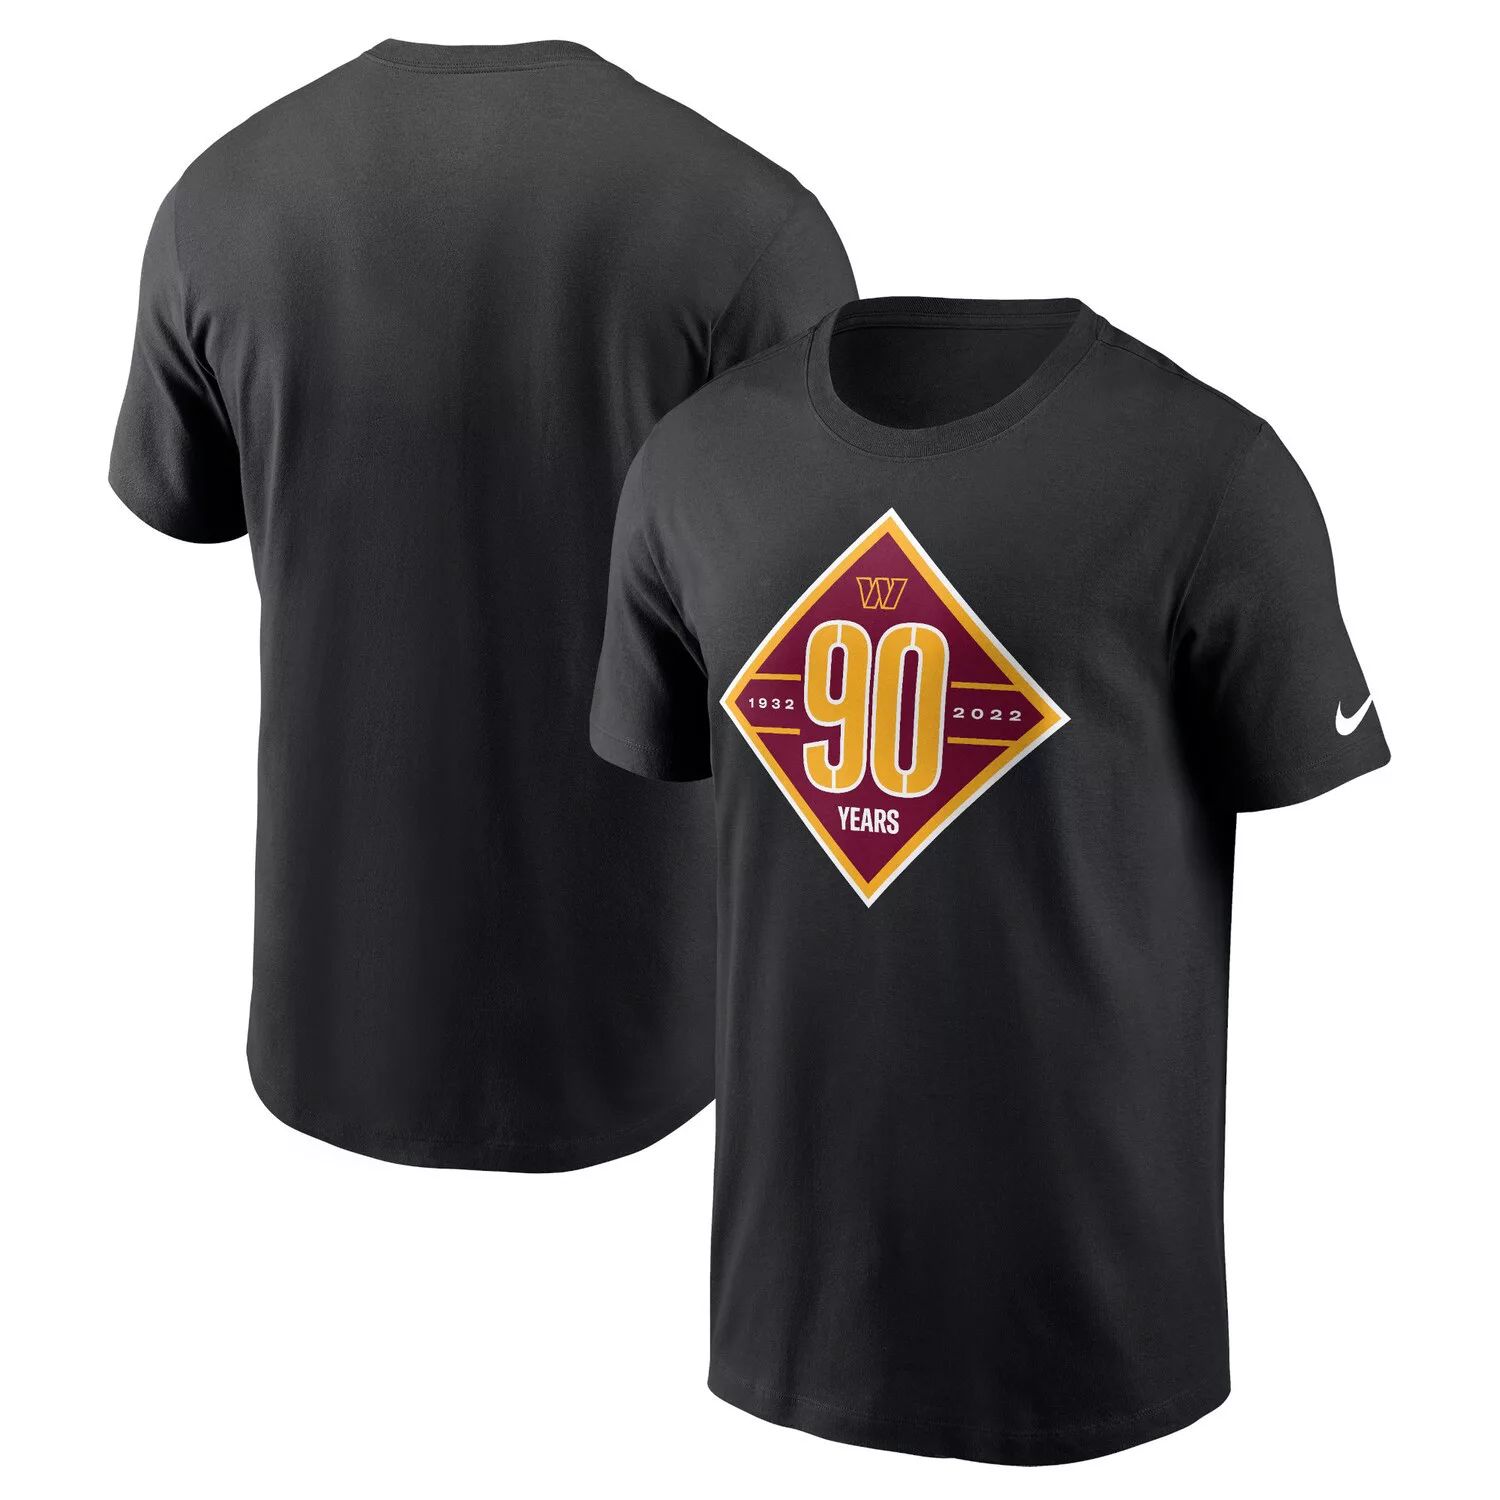 цена Мужская черная футболка Nike Washington Commanders в честь 90-летия